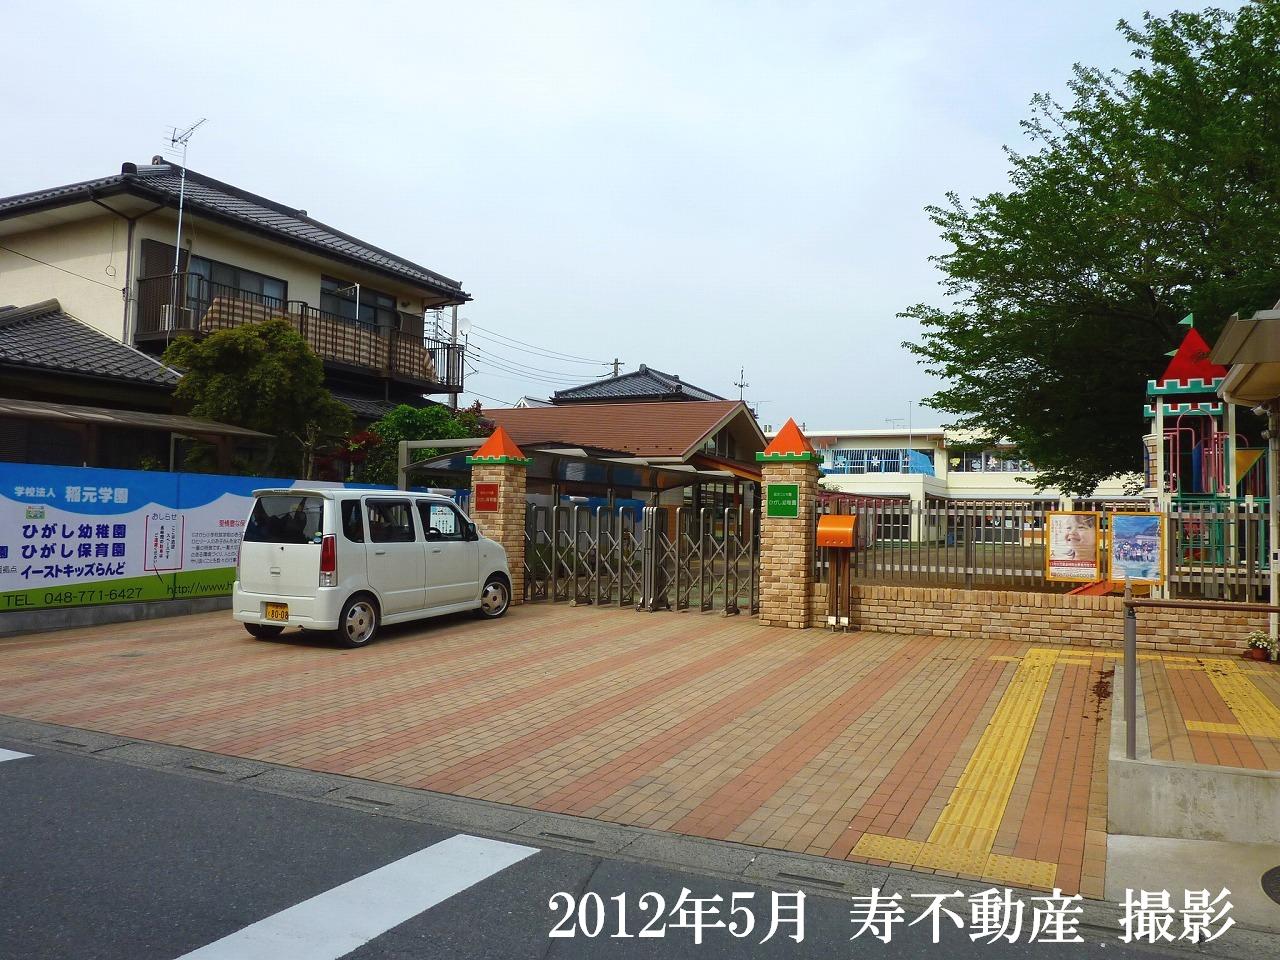 kindergarten ・ Nursery. Certified child Gardens east nursery school (kindergarten ・ 647m to the nursery)